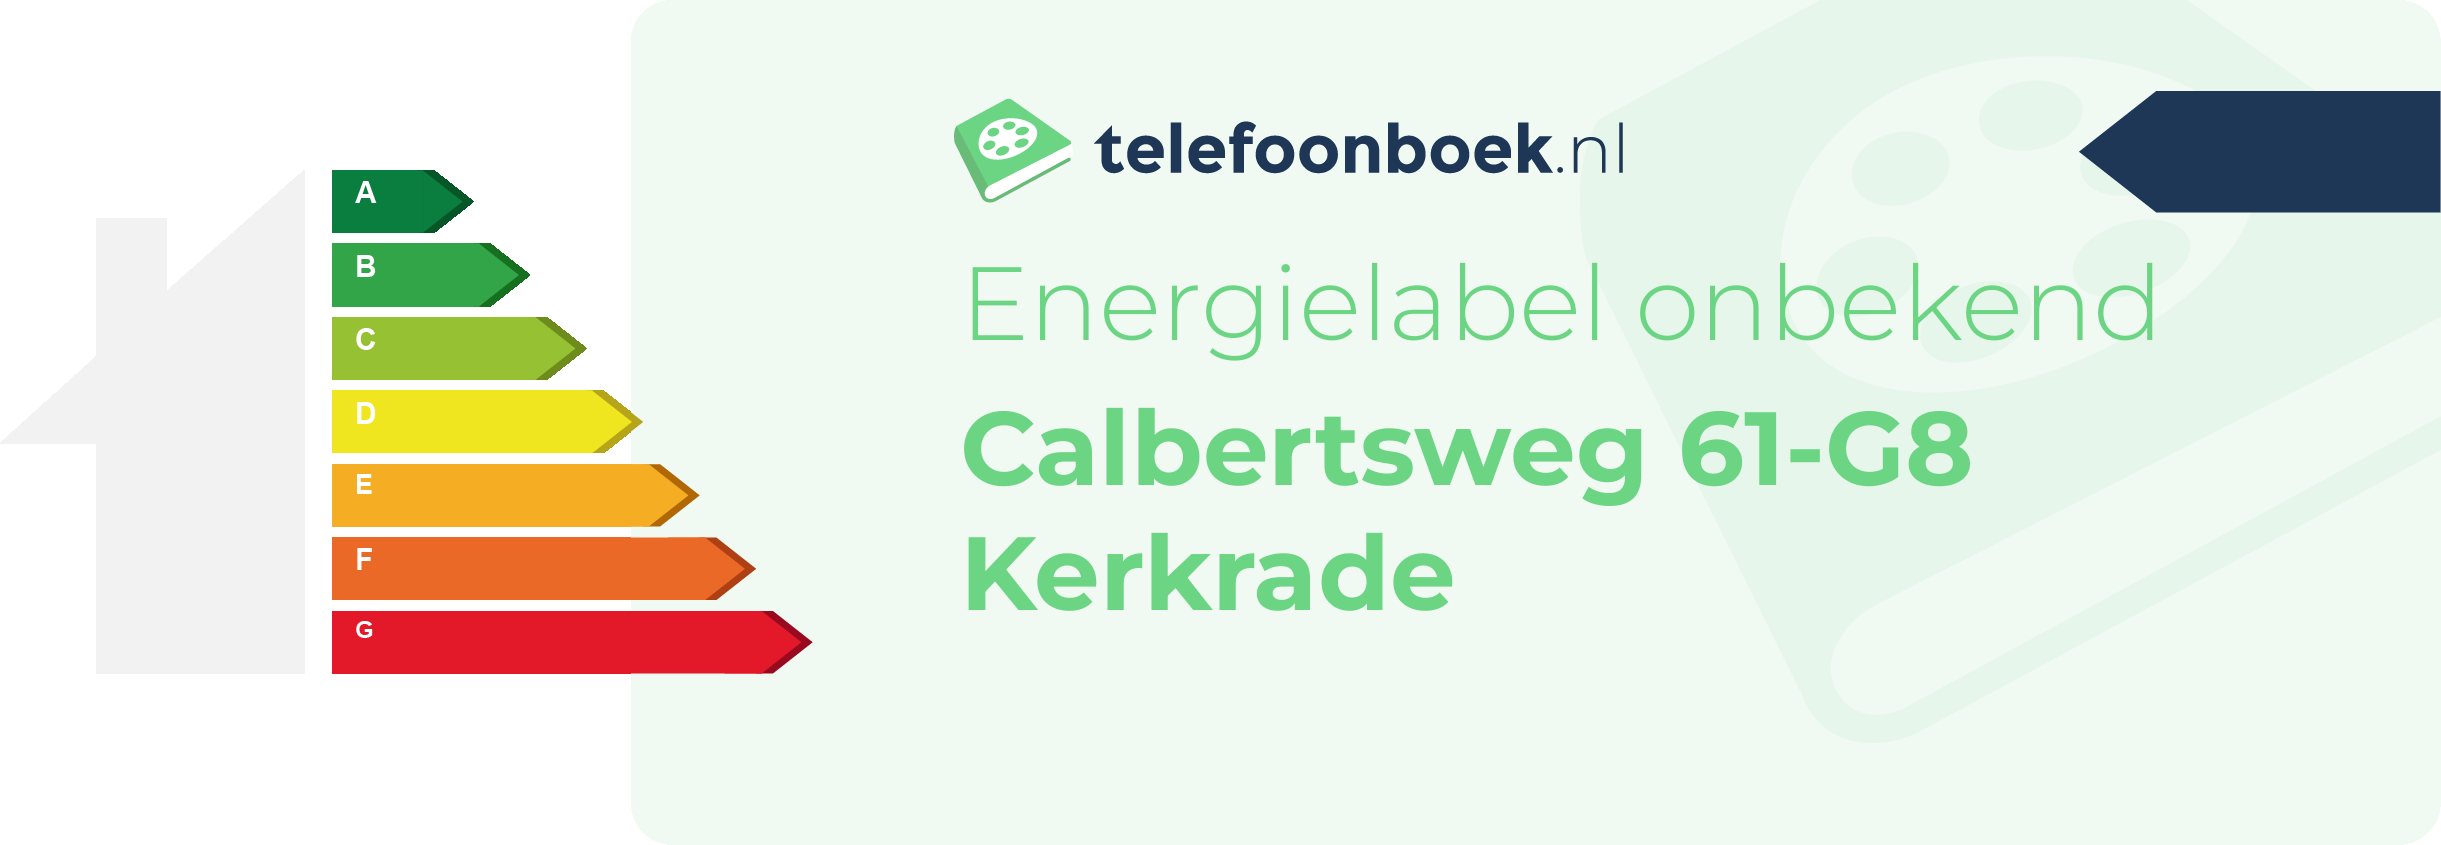 Energielabel Calbertsweg 61-G8 Kerkrade